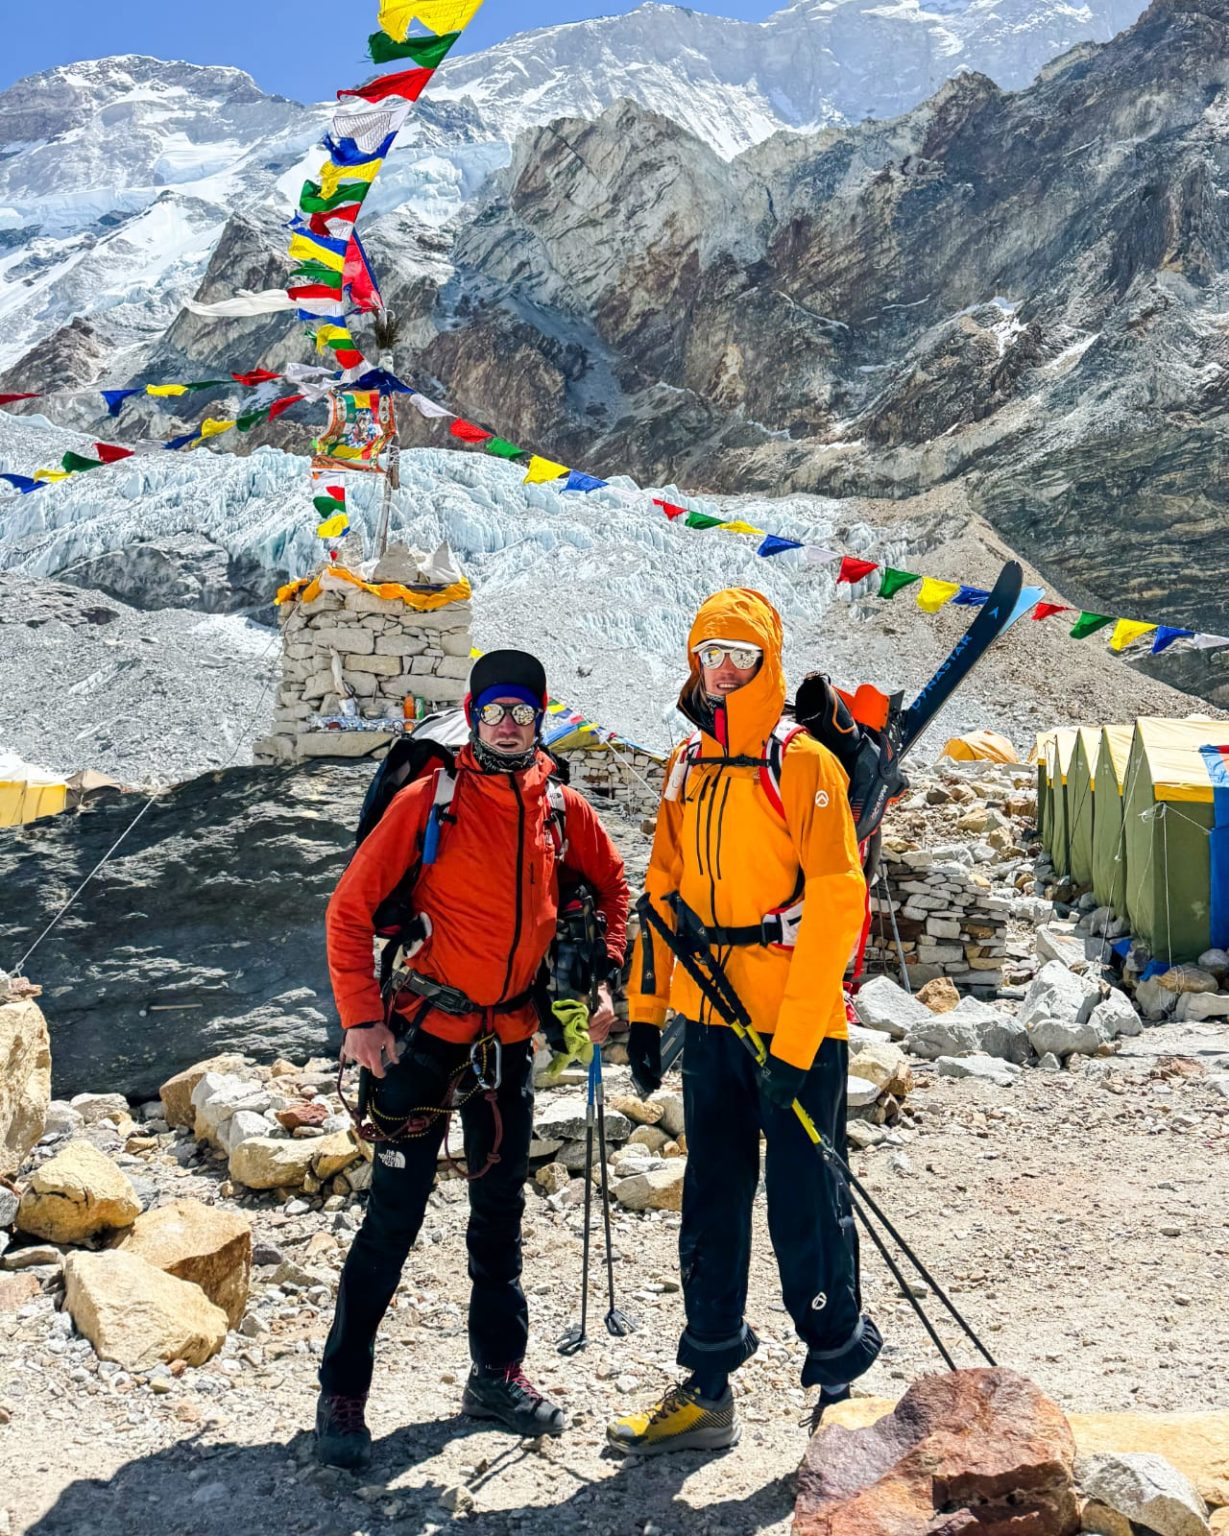 Première descente skis Kangchenjunga (8586m) Bartek Ziemski